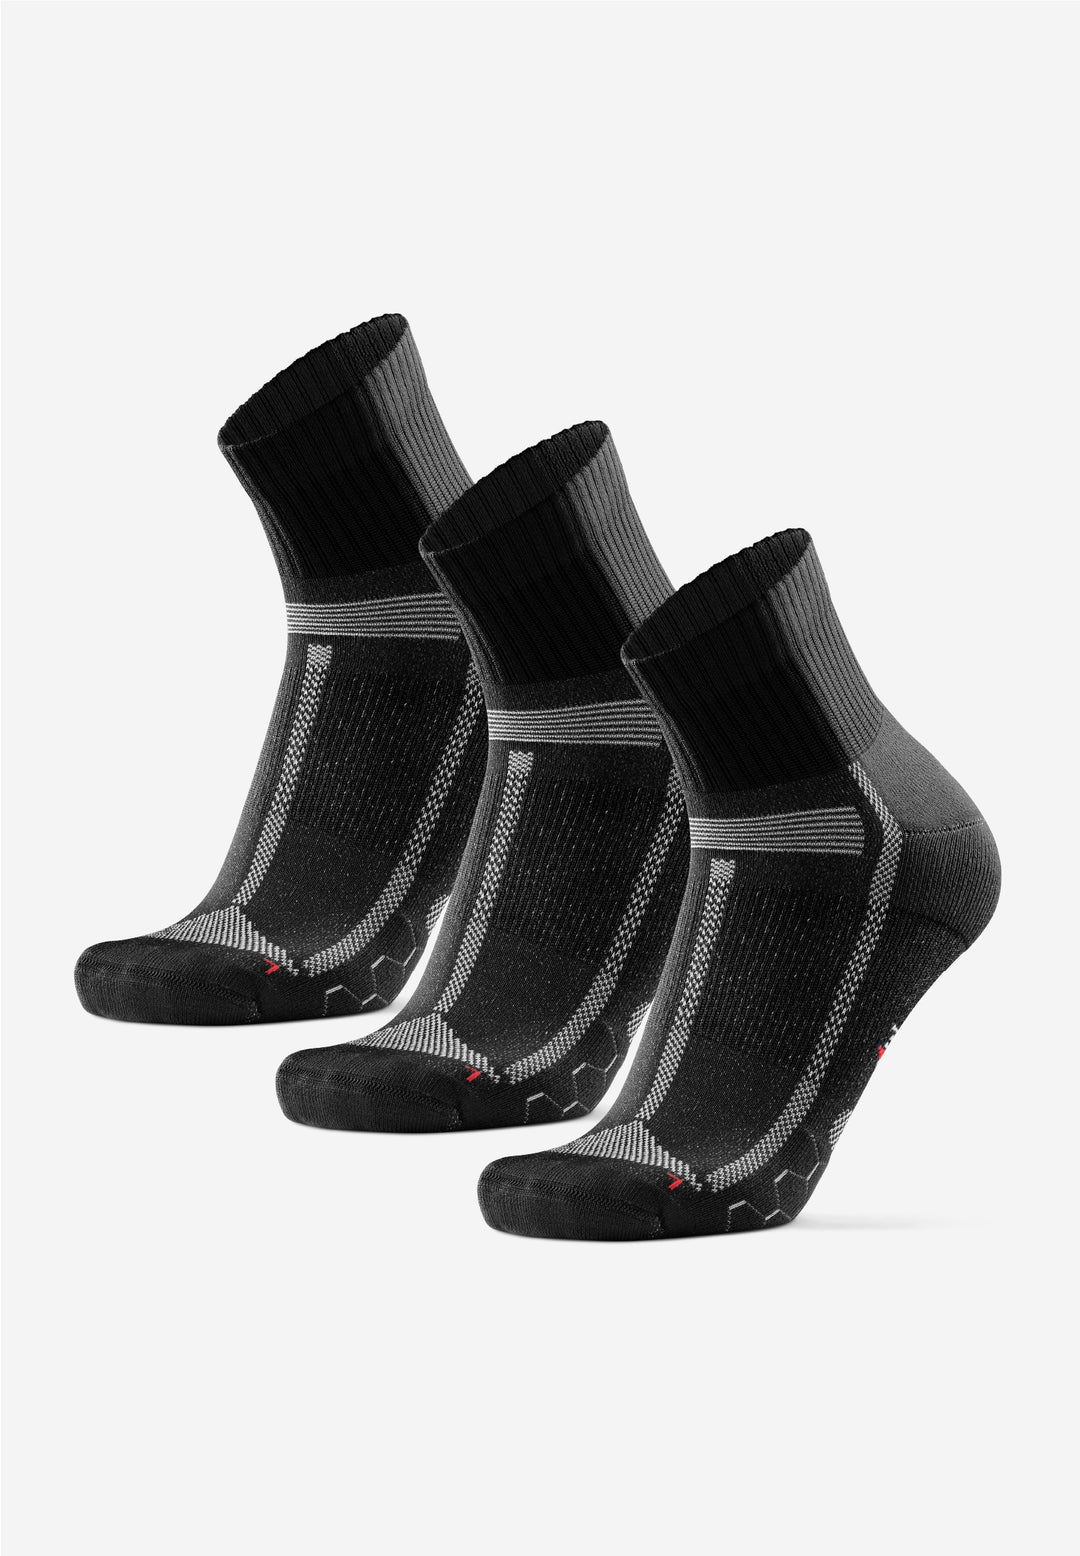 DANISH ENDURANCE 3 Pack Low-Cut Long Distance Running Socks, Men